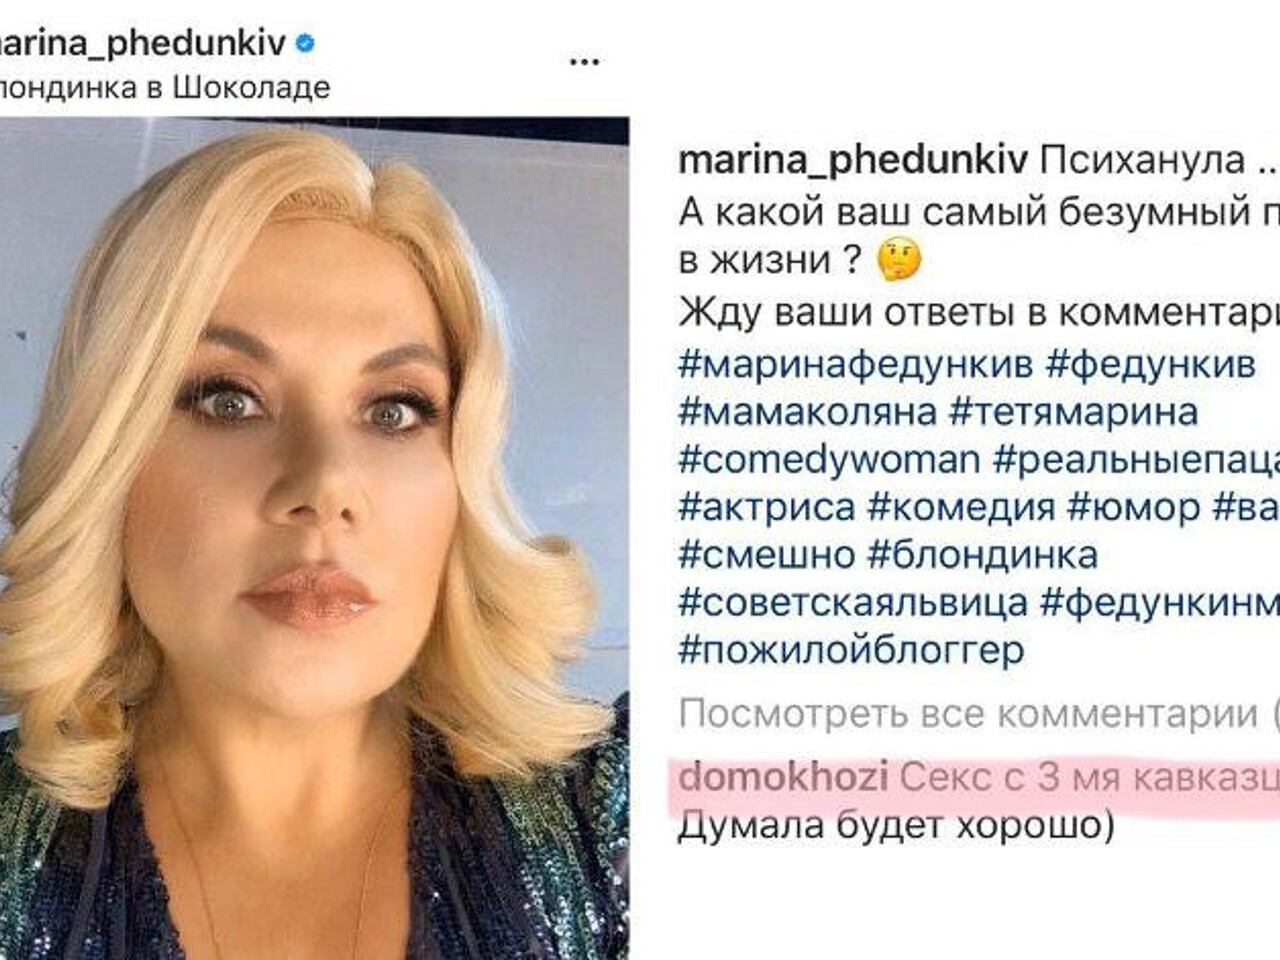 Жена Кириленко призналась в сексе с тремя кавказцами - Рамблер/женский